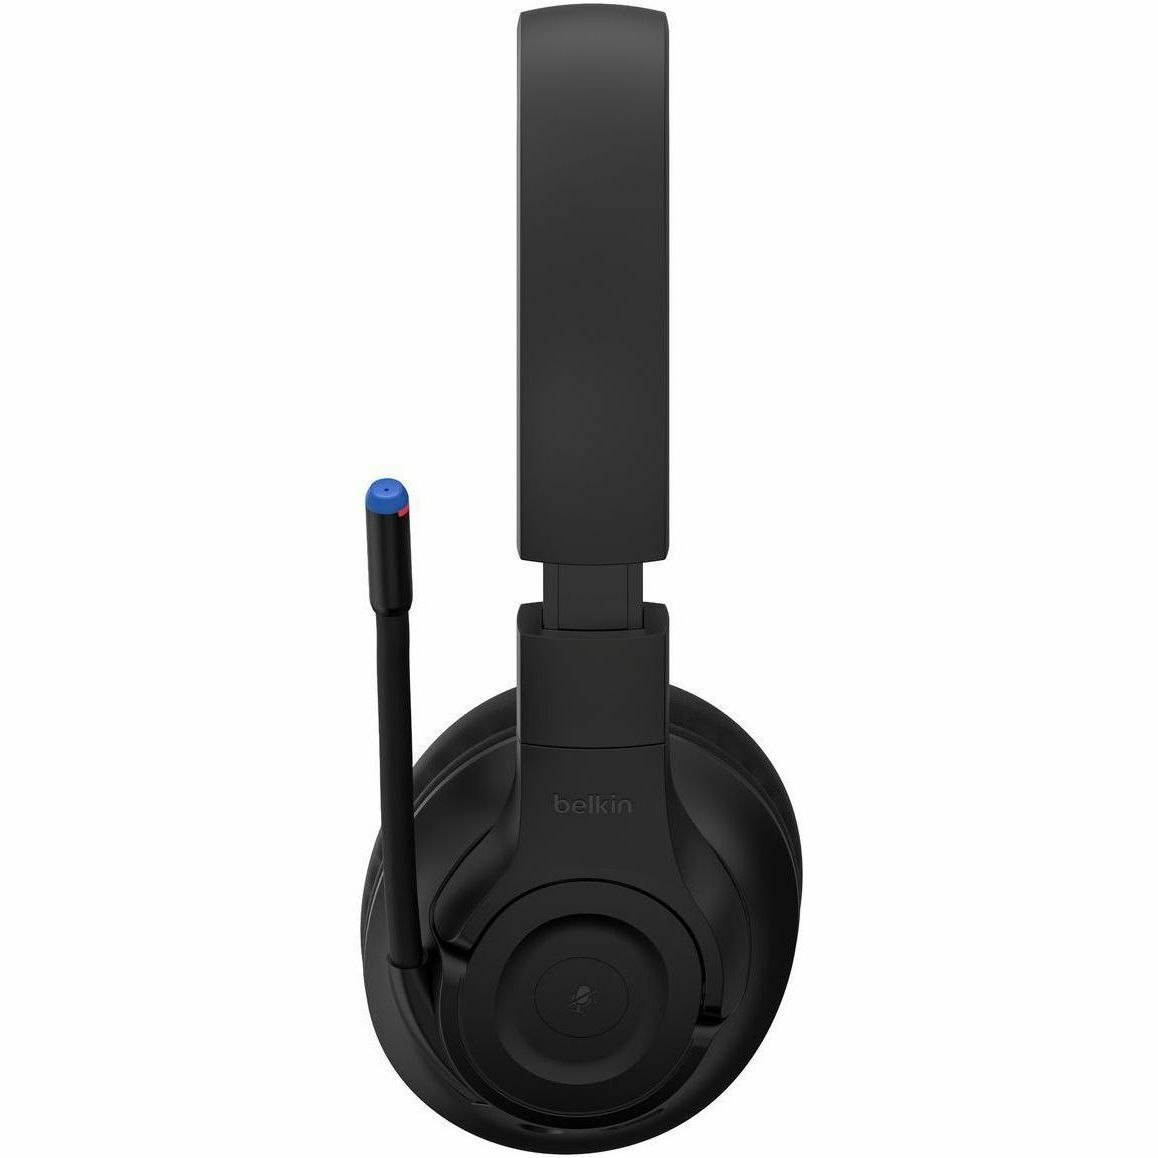 Belkin Wireless Over-Ear Headset for Kids with Mic - On-Ear Earphones for iPhone, iPad, Fire Tablet & More - Black